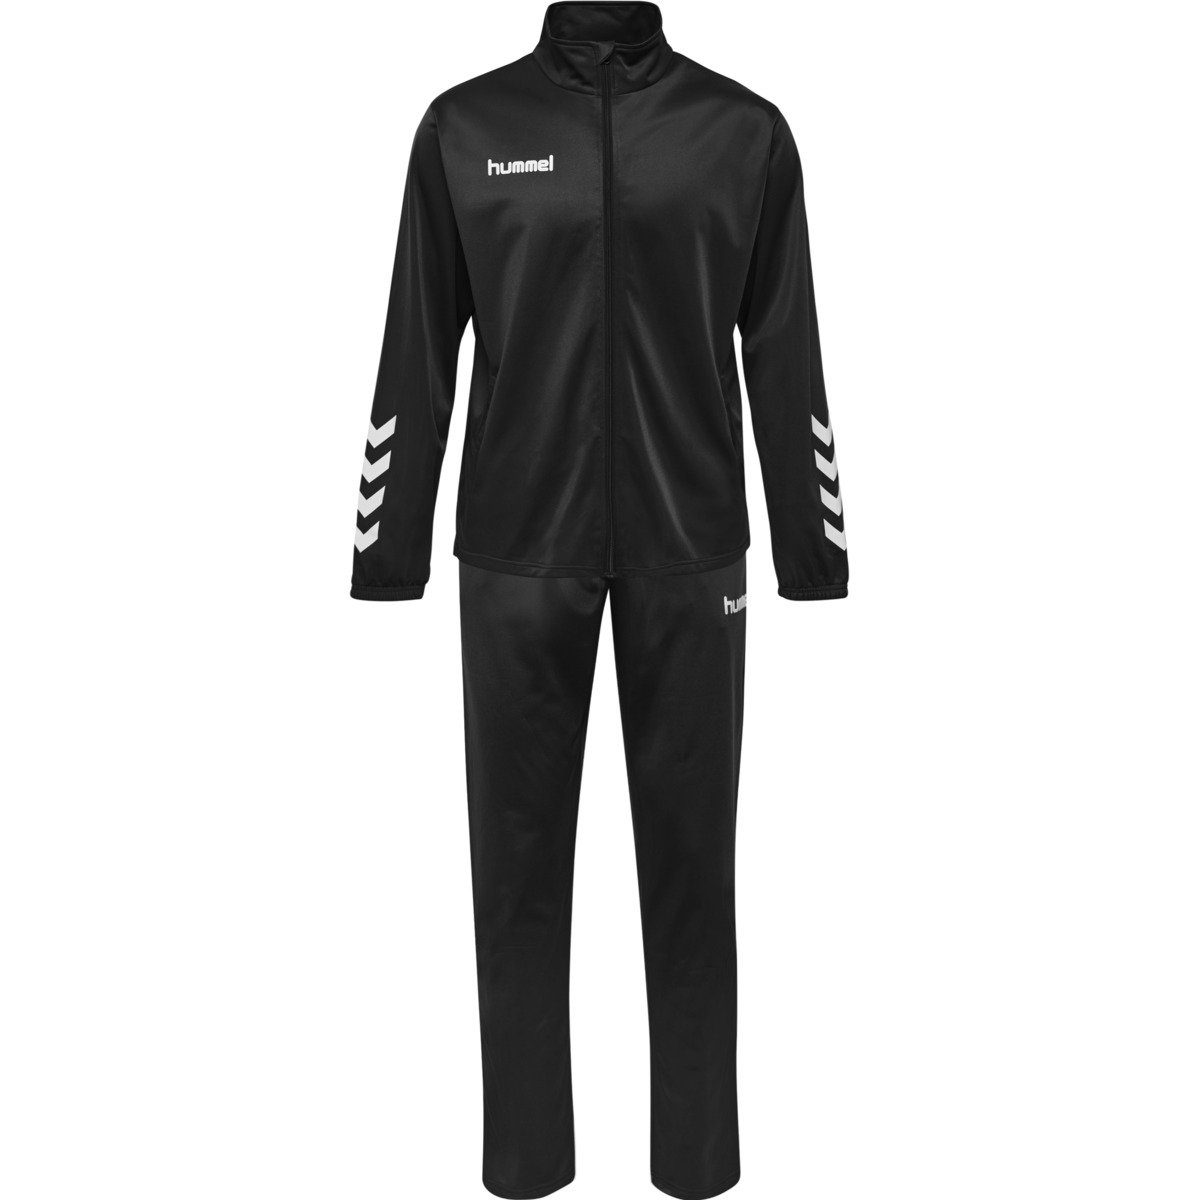 hummel Jogginganzug BLACK Suit Poly Trainingsanzug Kinder HMLPROMO 2001 Unisex